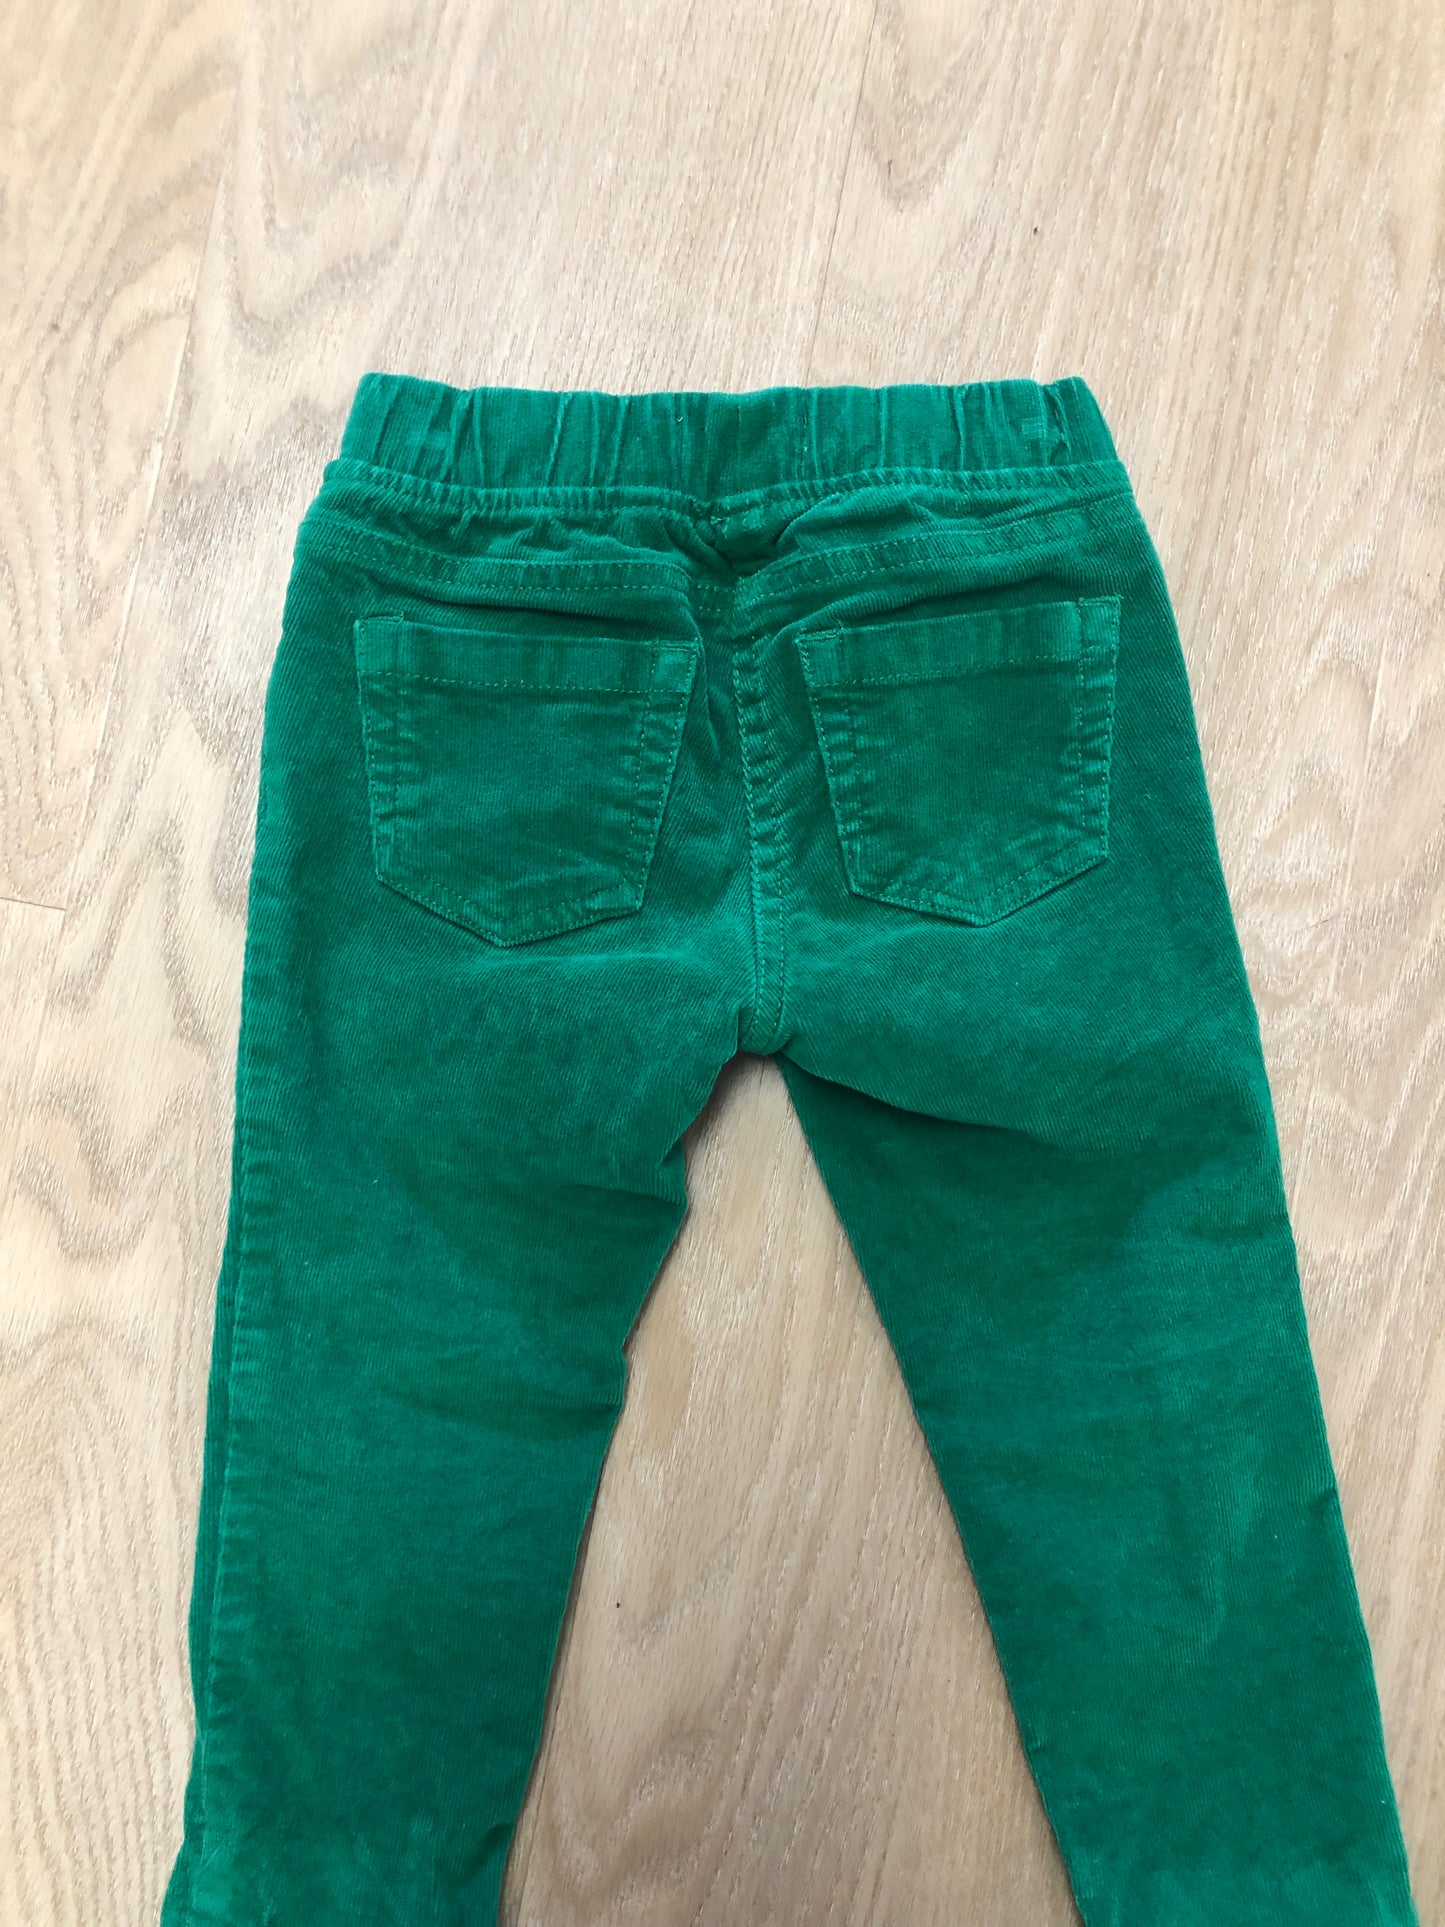 mini boden Child Size 3T Green corduroy Pants